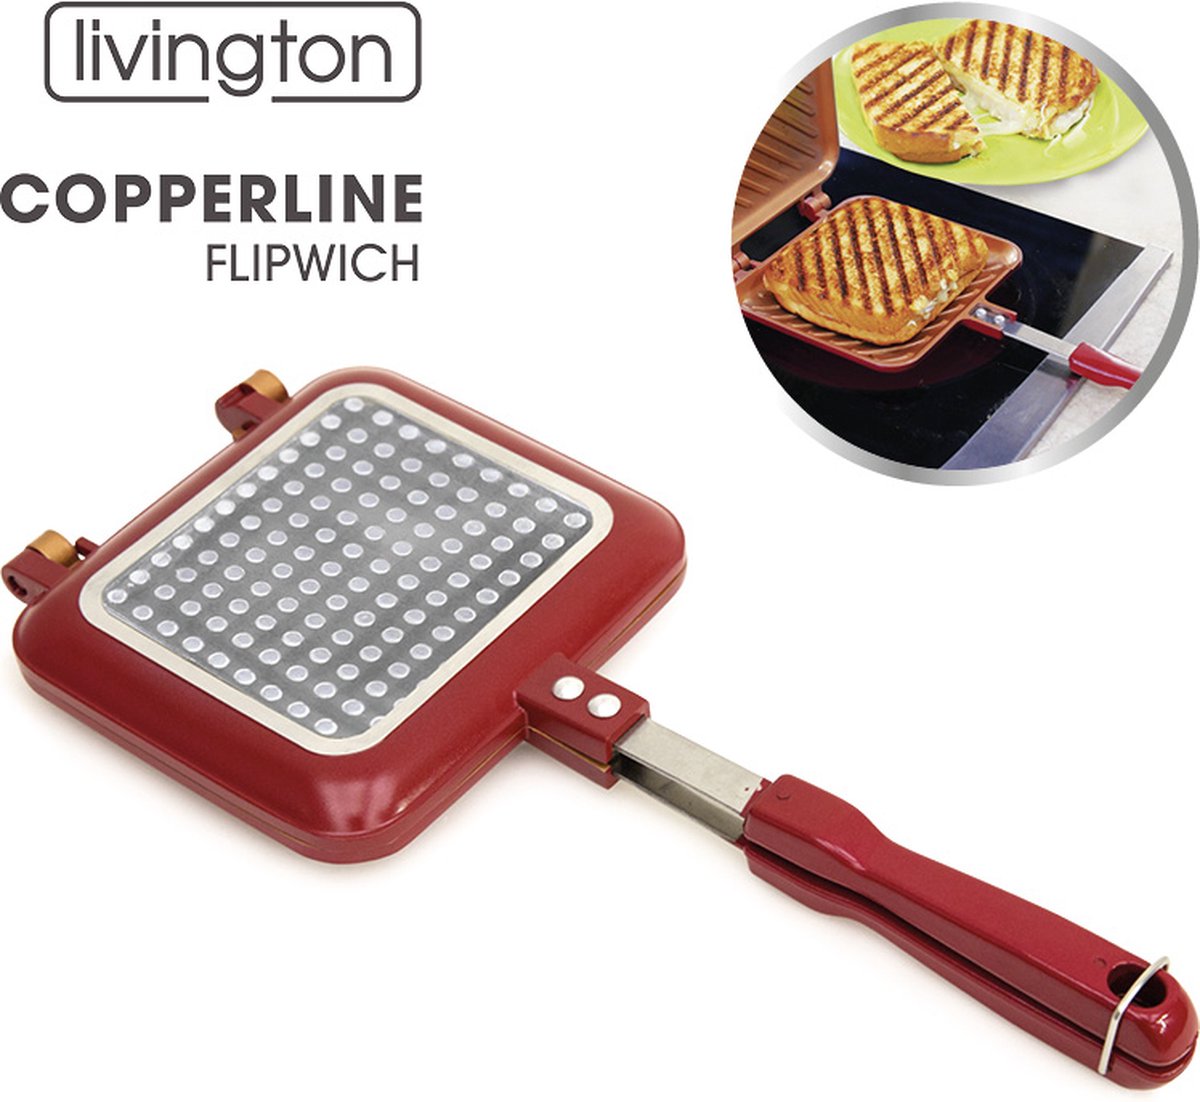 Livington Copperline Flipwich Tosti-ijzer Tosti-pan - Sandwich maker |  bol.com